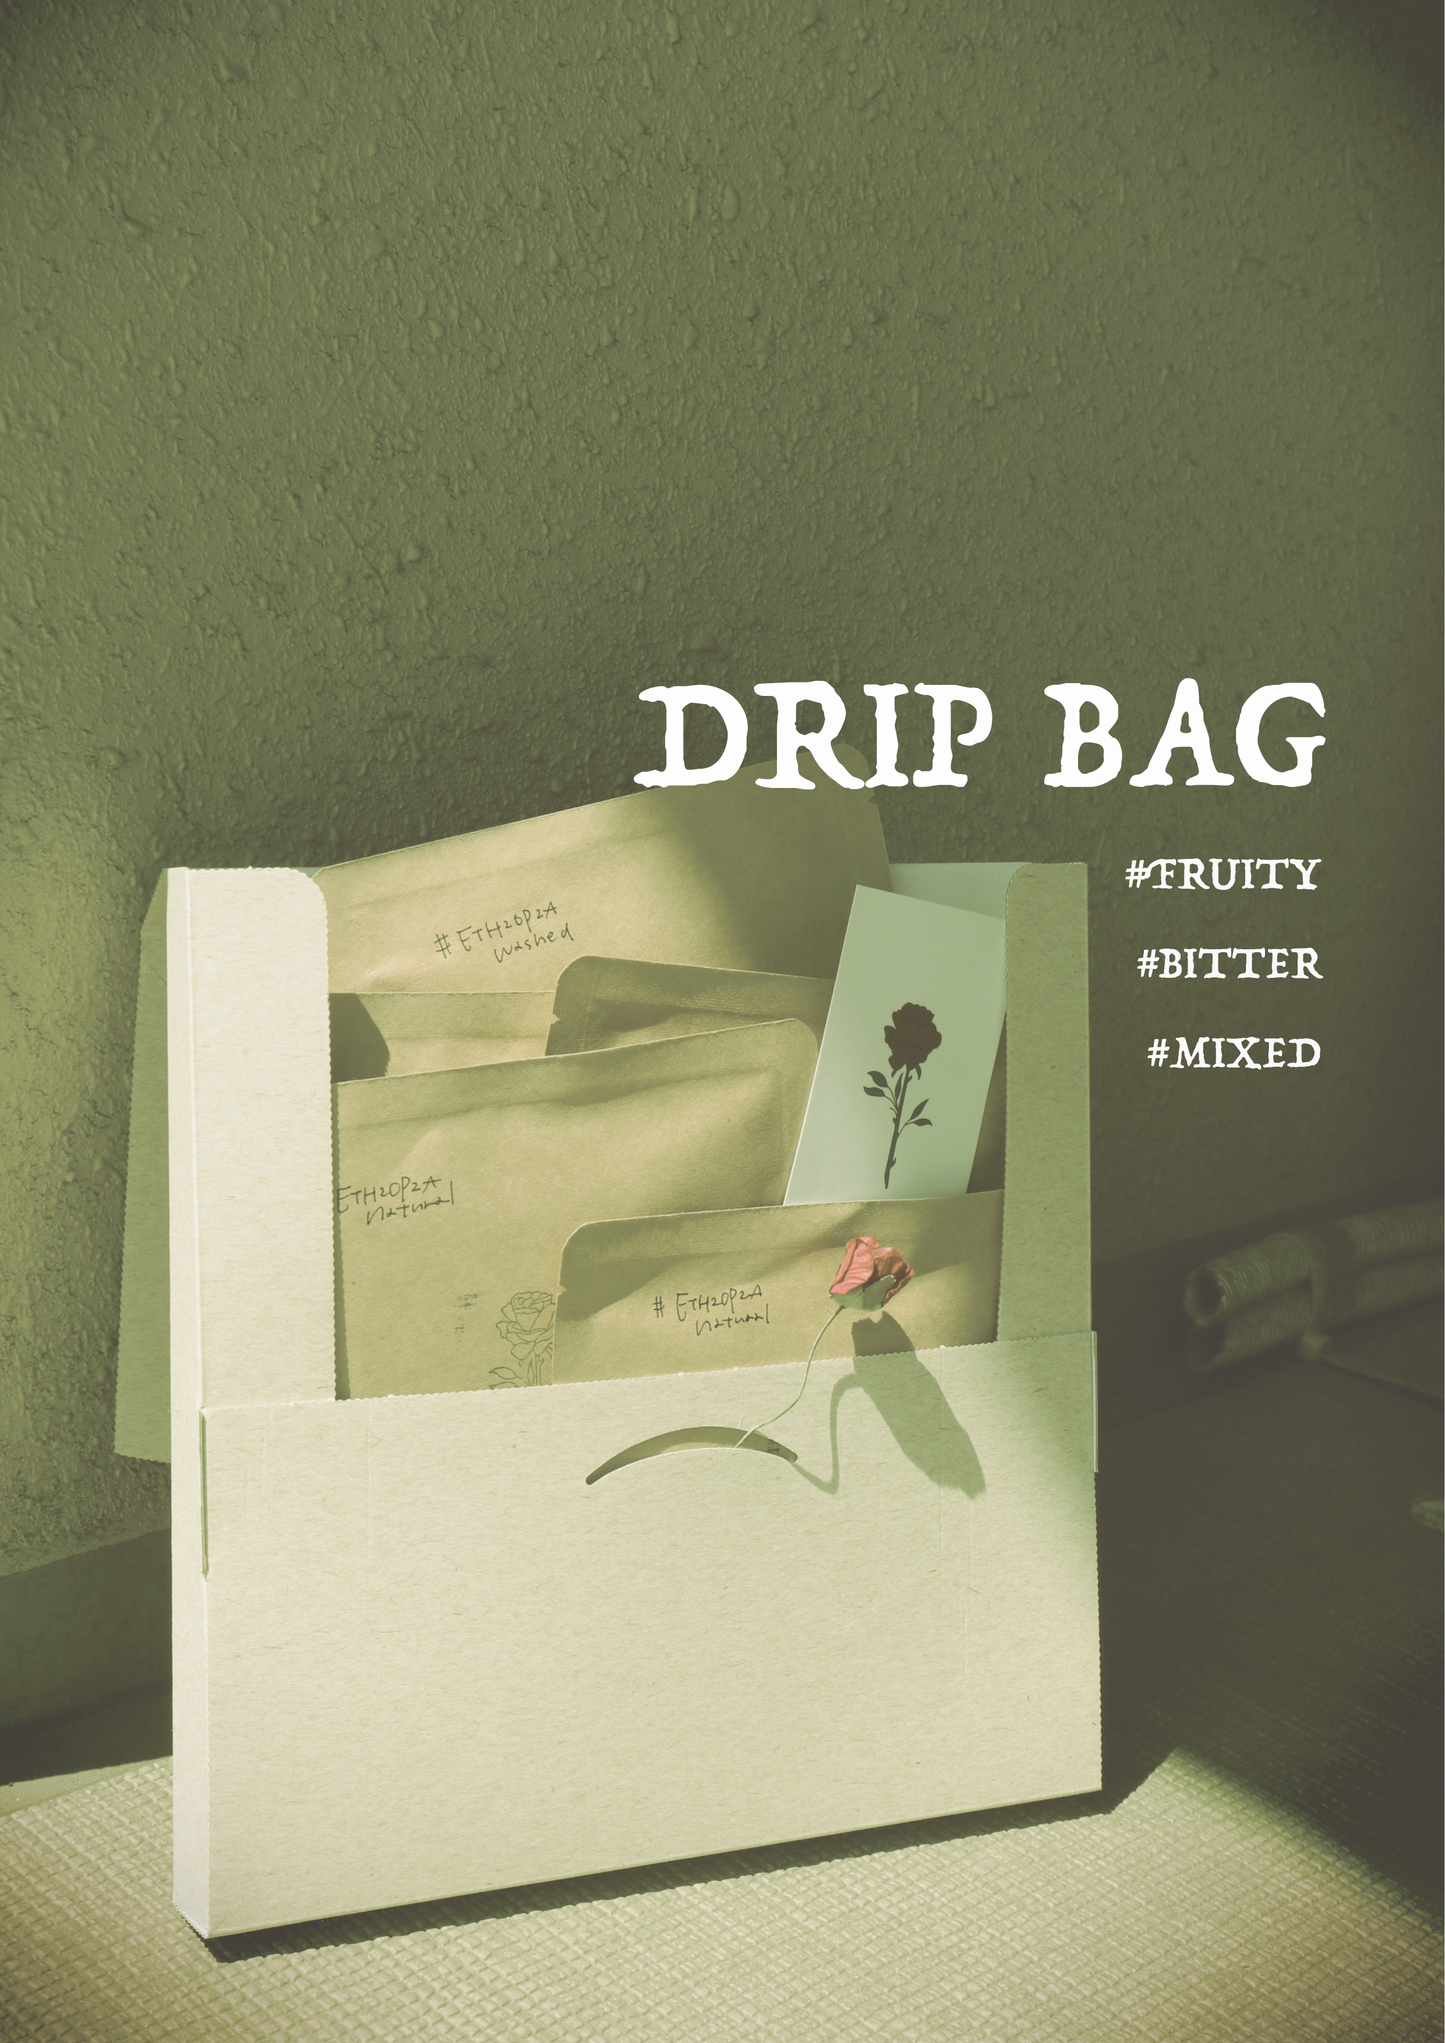 Drip bags